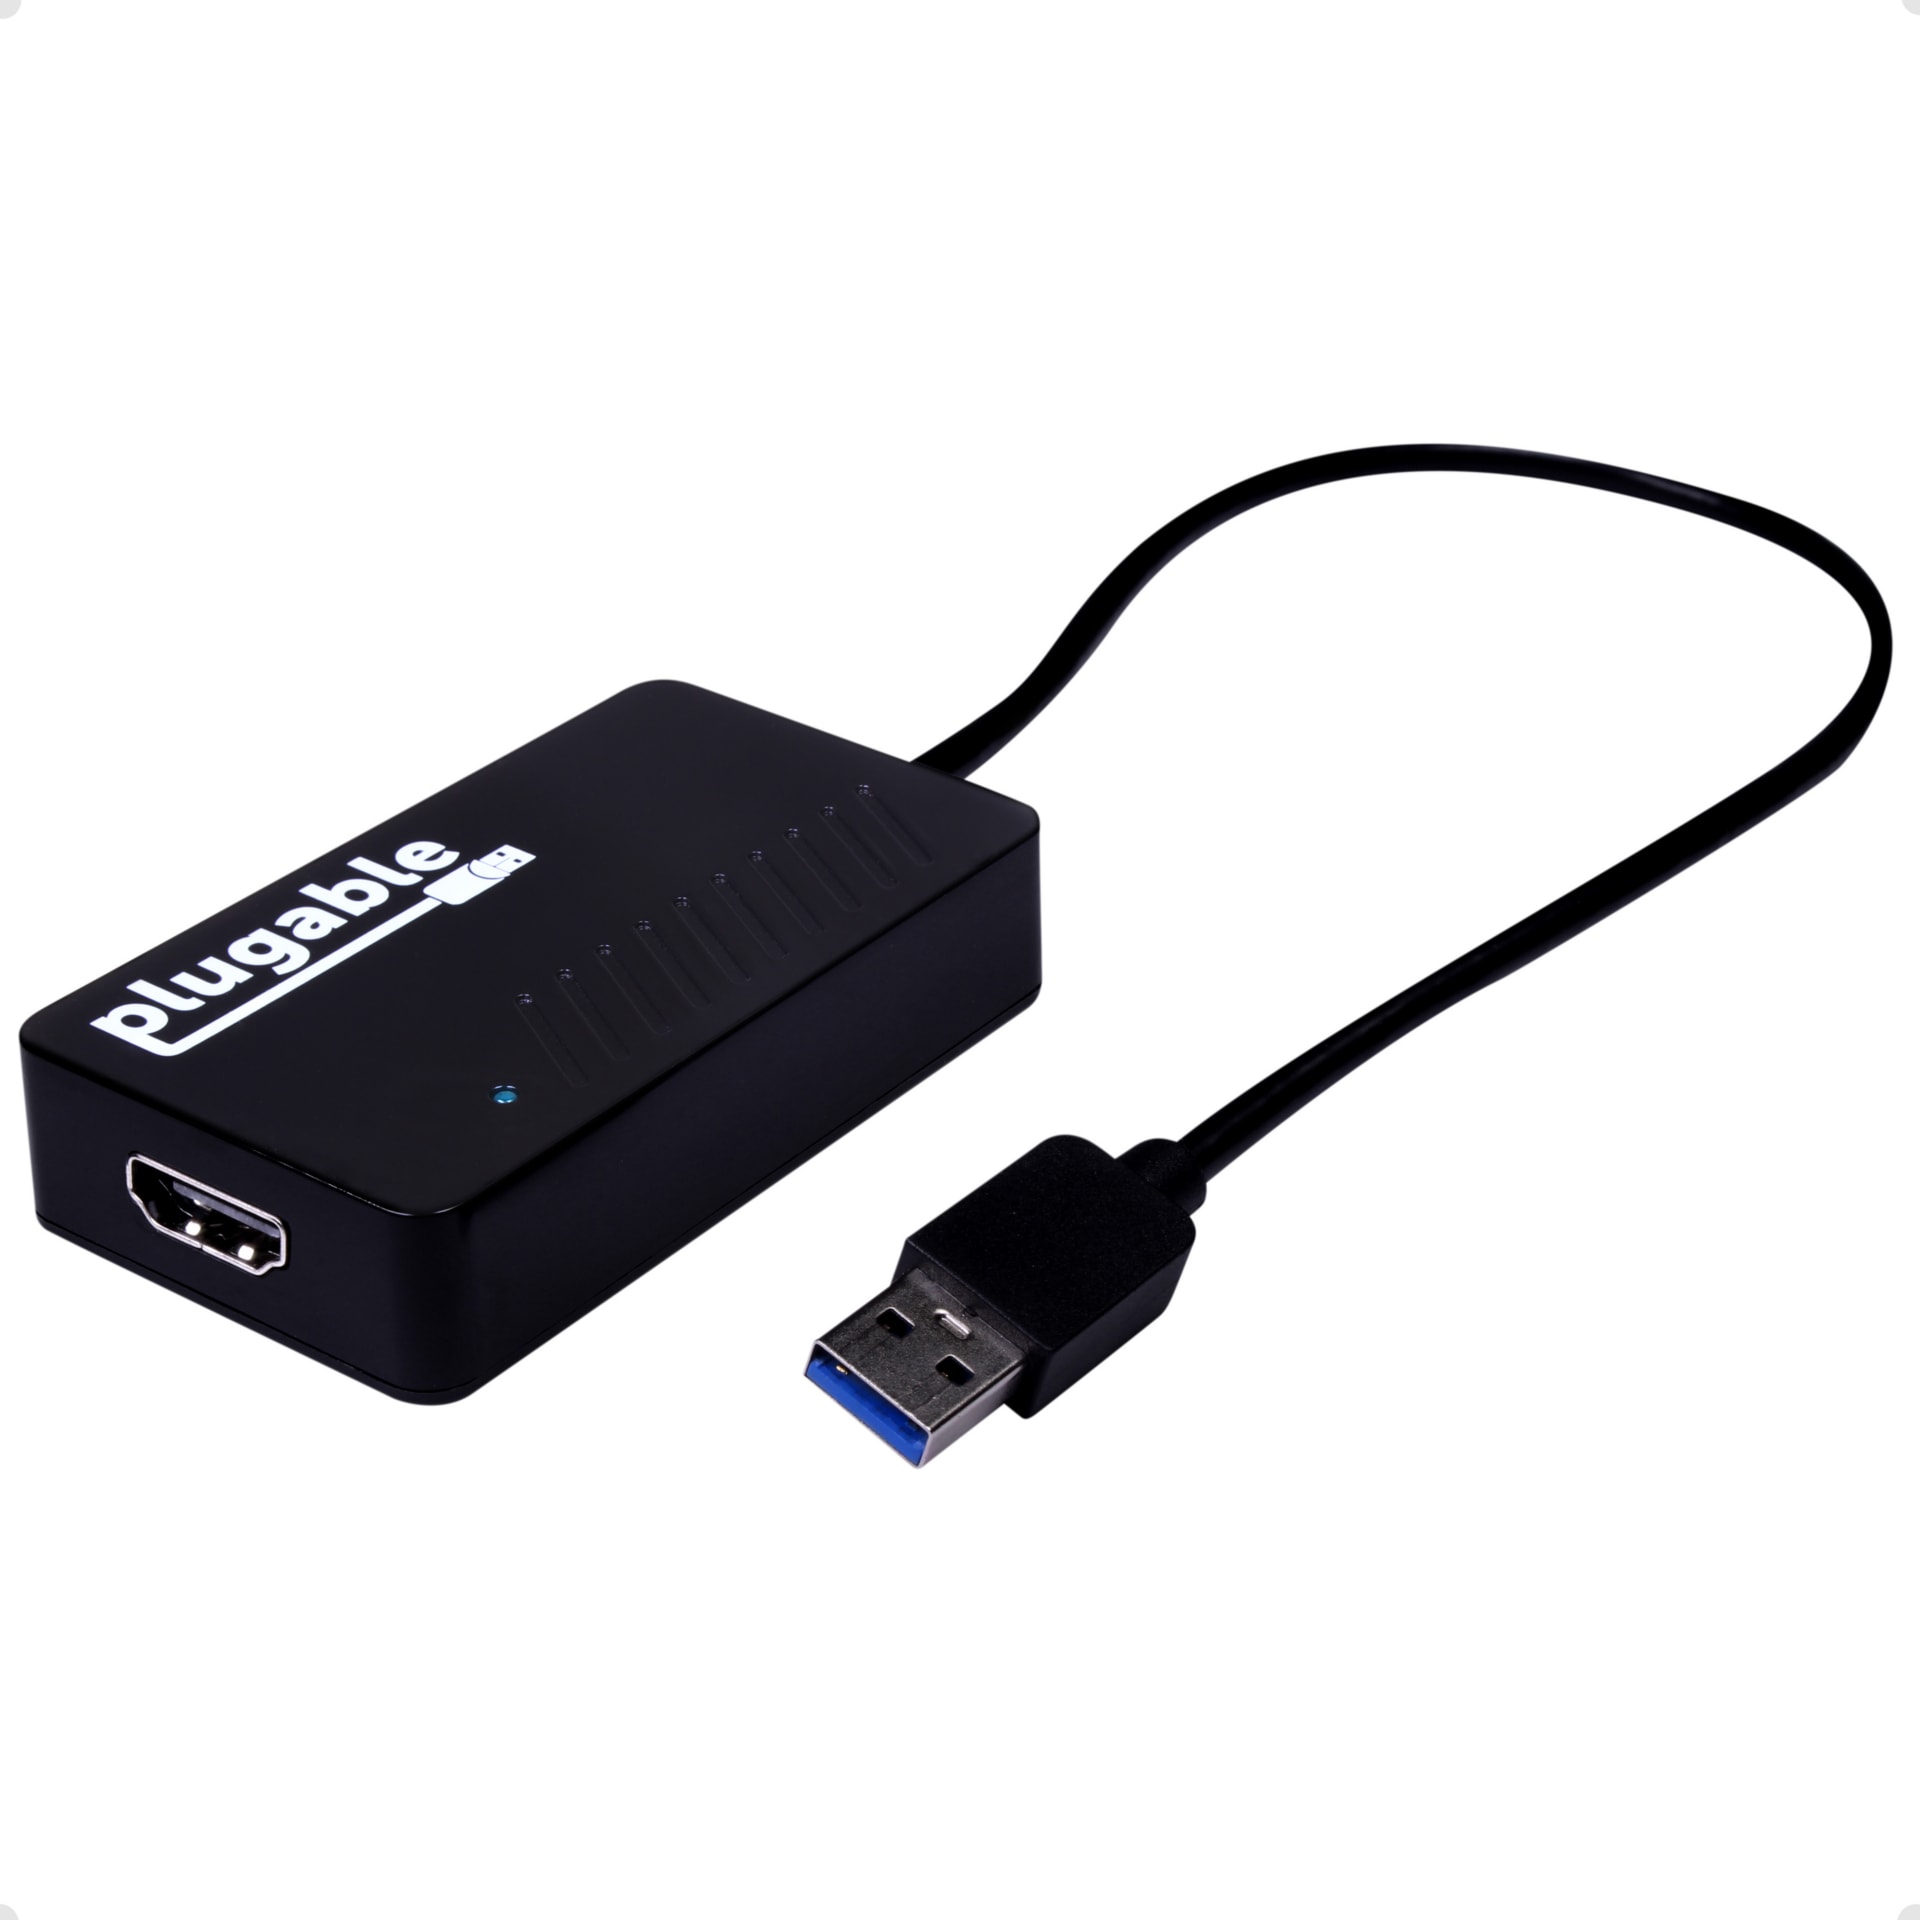 Plugable USB 3.0 to HDMI 4K UHD Video Graphics Adapter